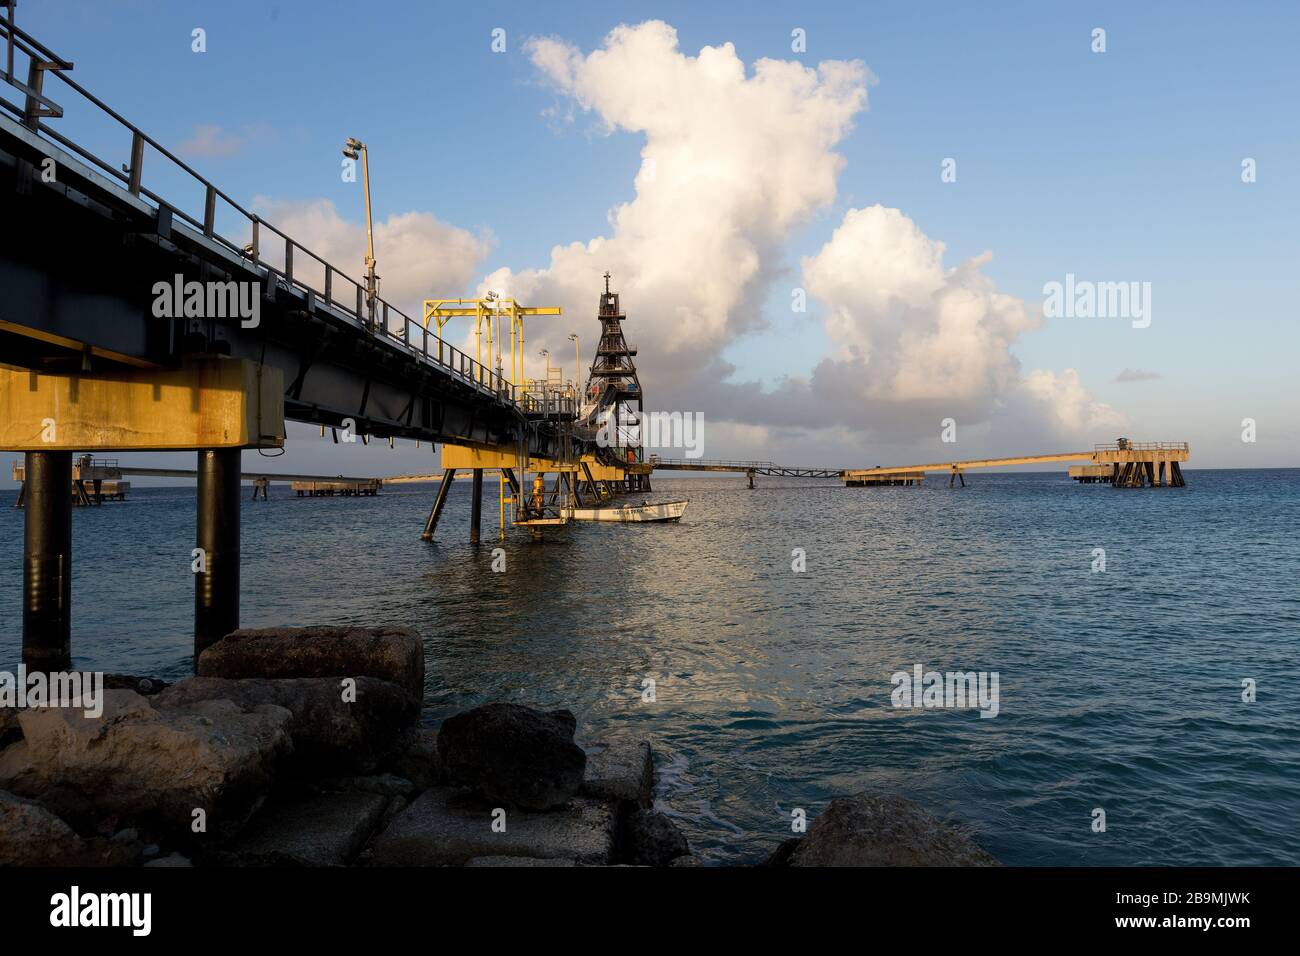 Salt pier conveyor to transport salt to ship loading Bonaire, Caribbean Stock Photo